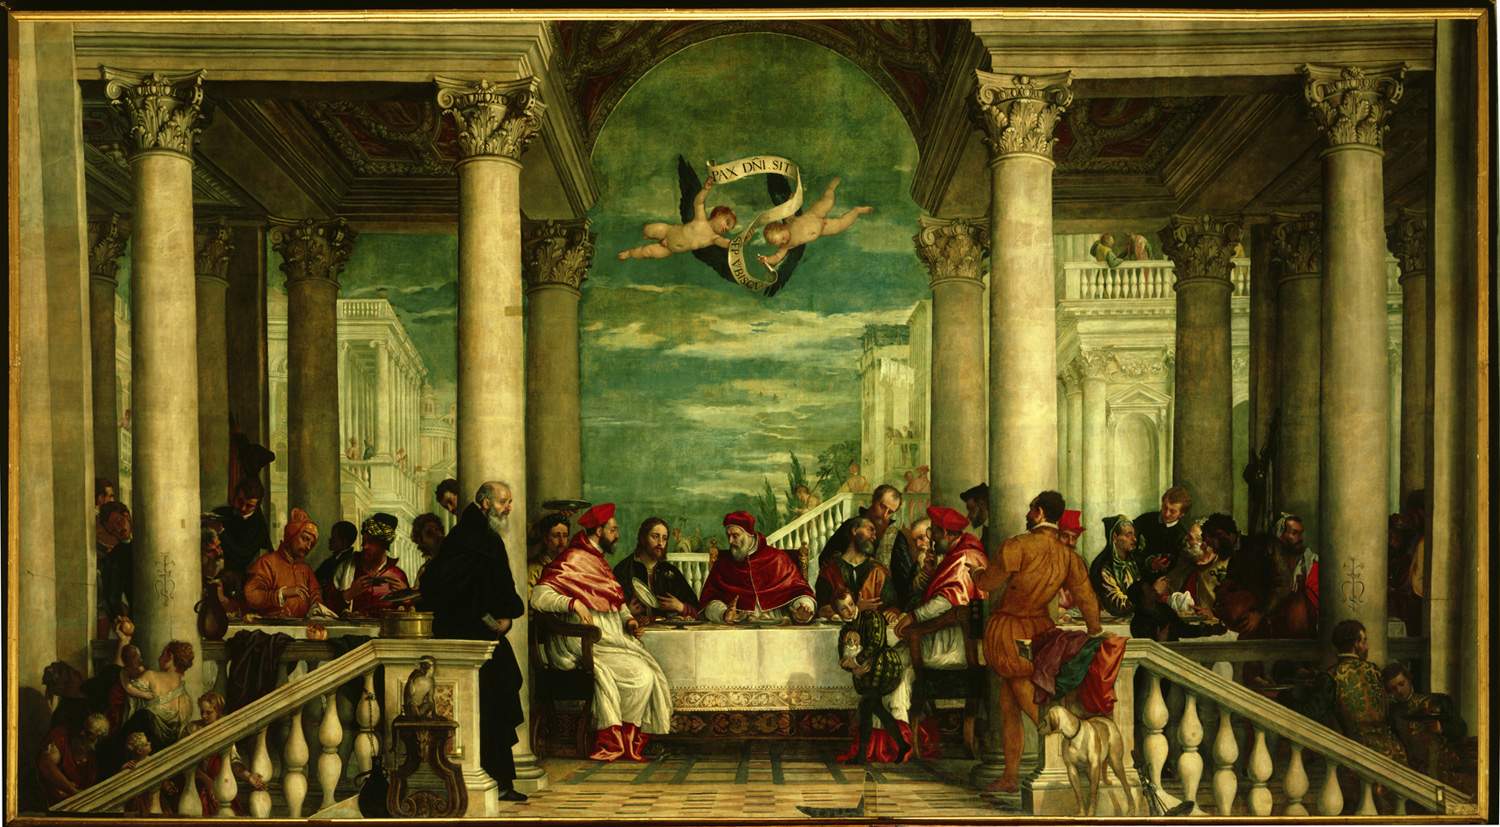 Vicenza, Veronese's masterpiece, Monte Berico's 